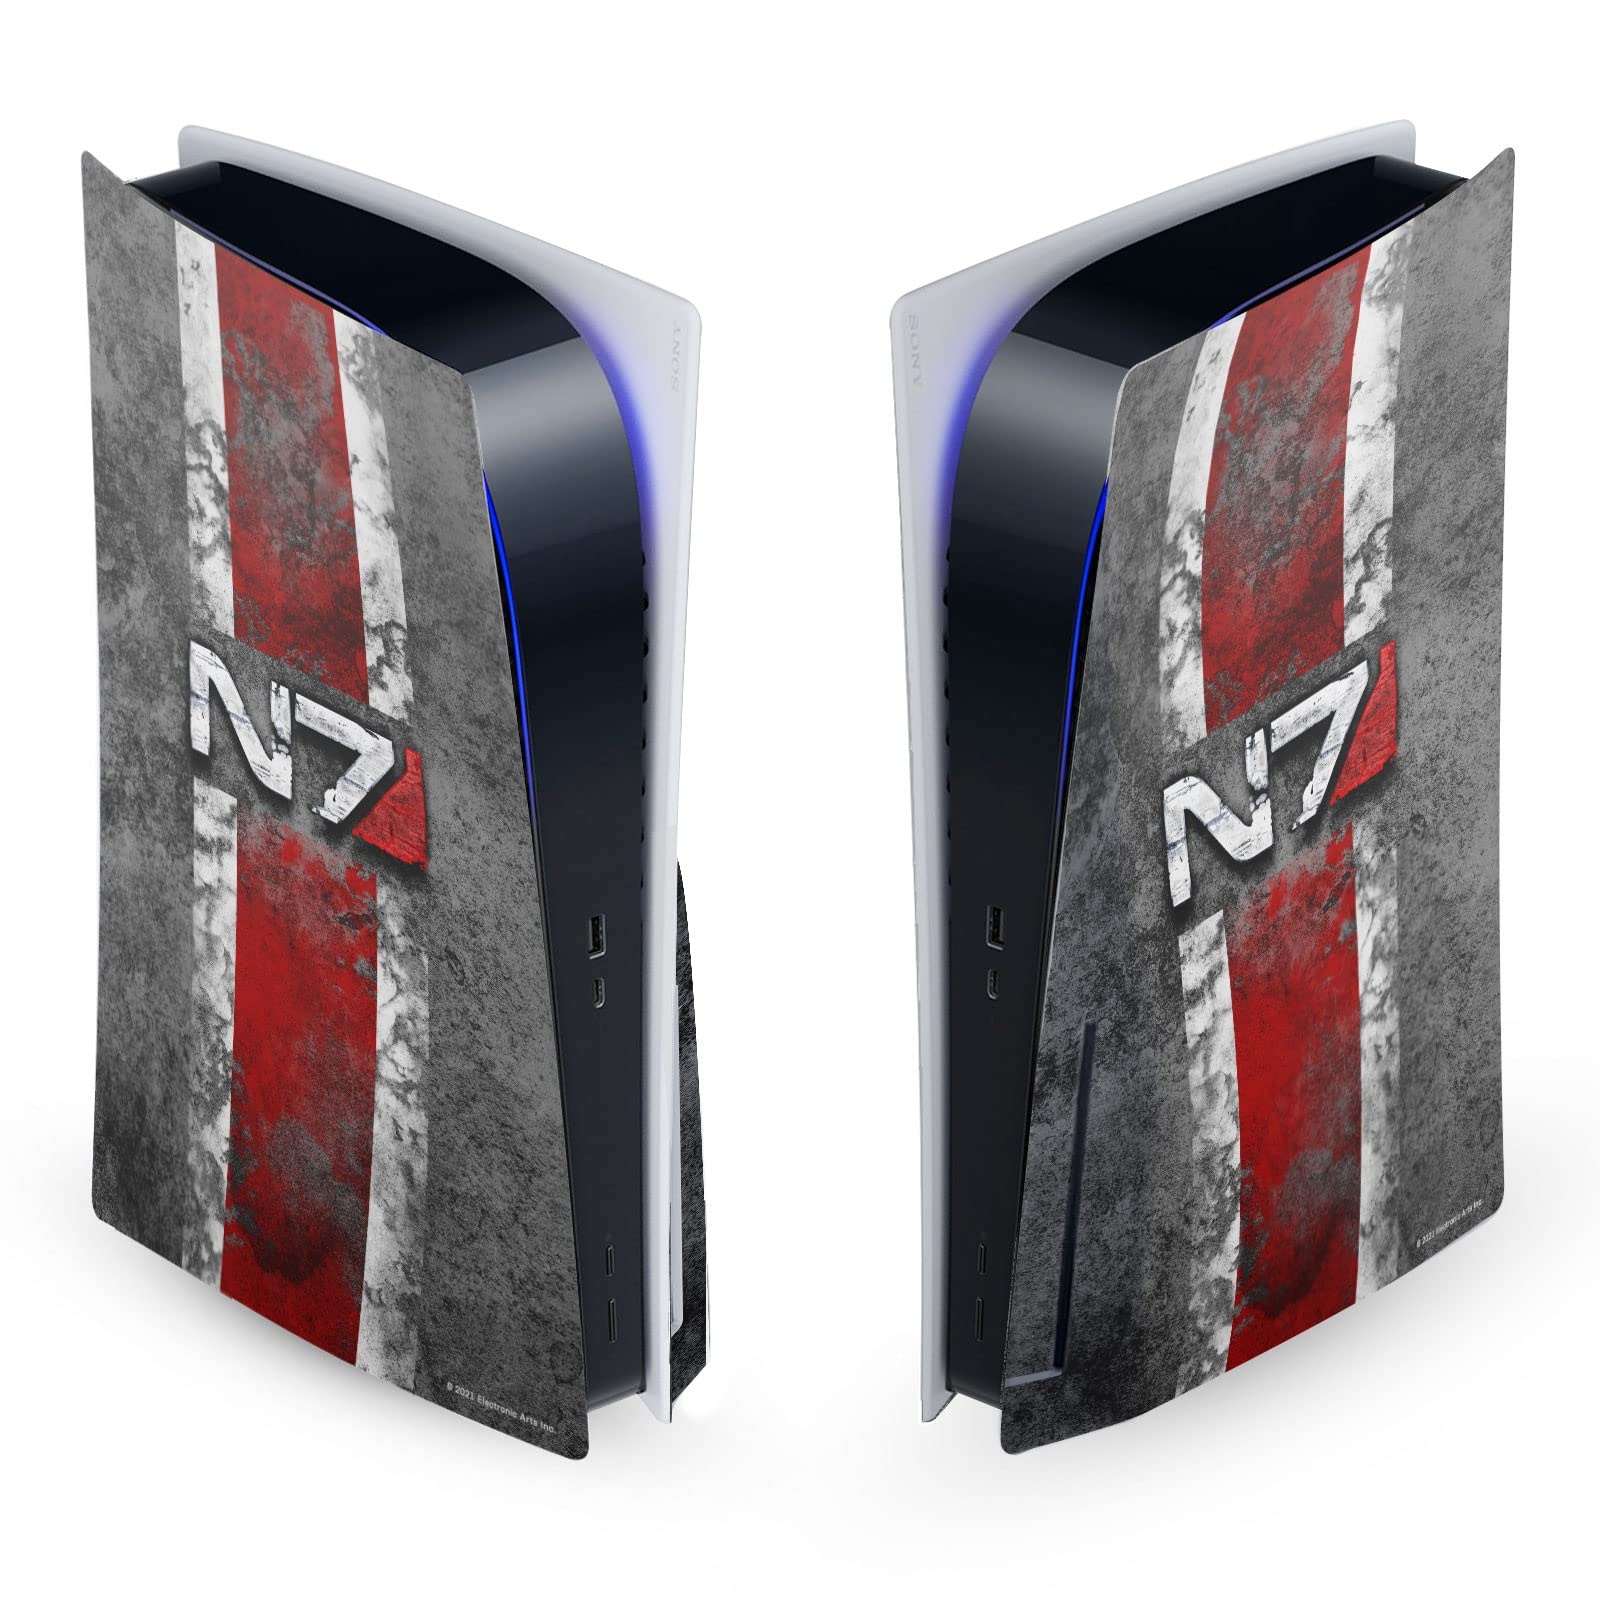 Head Case Designs Offiziell Offizielle EA Bioware Mass Effect N7 Logo Betruebt Grafiken Vinyl Frontplatte Haut Gaming Aufkleber Abziehbild kompatibel mit Sony Playstation 5 PS5 Disc Edition Console